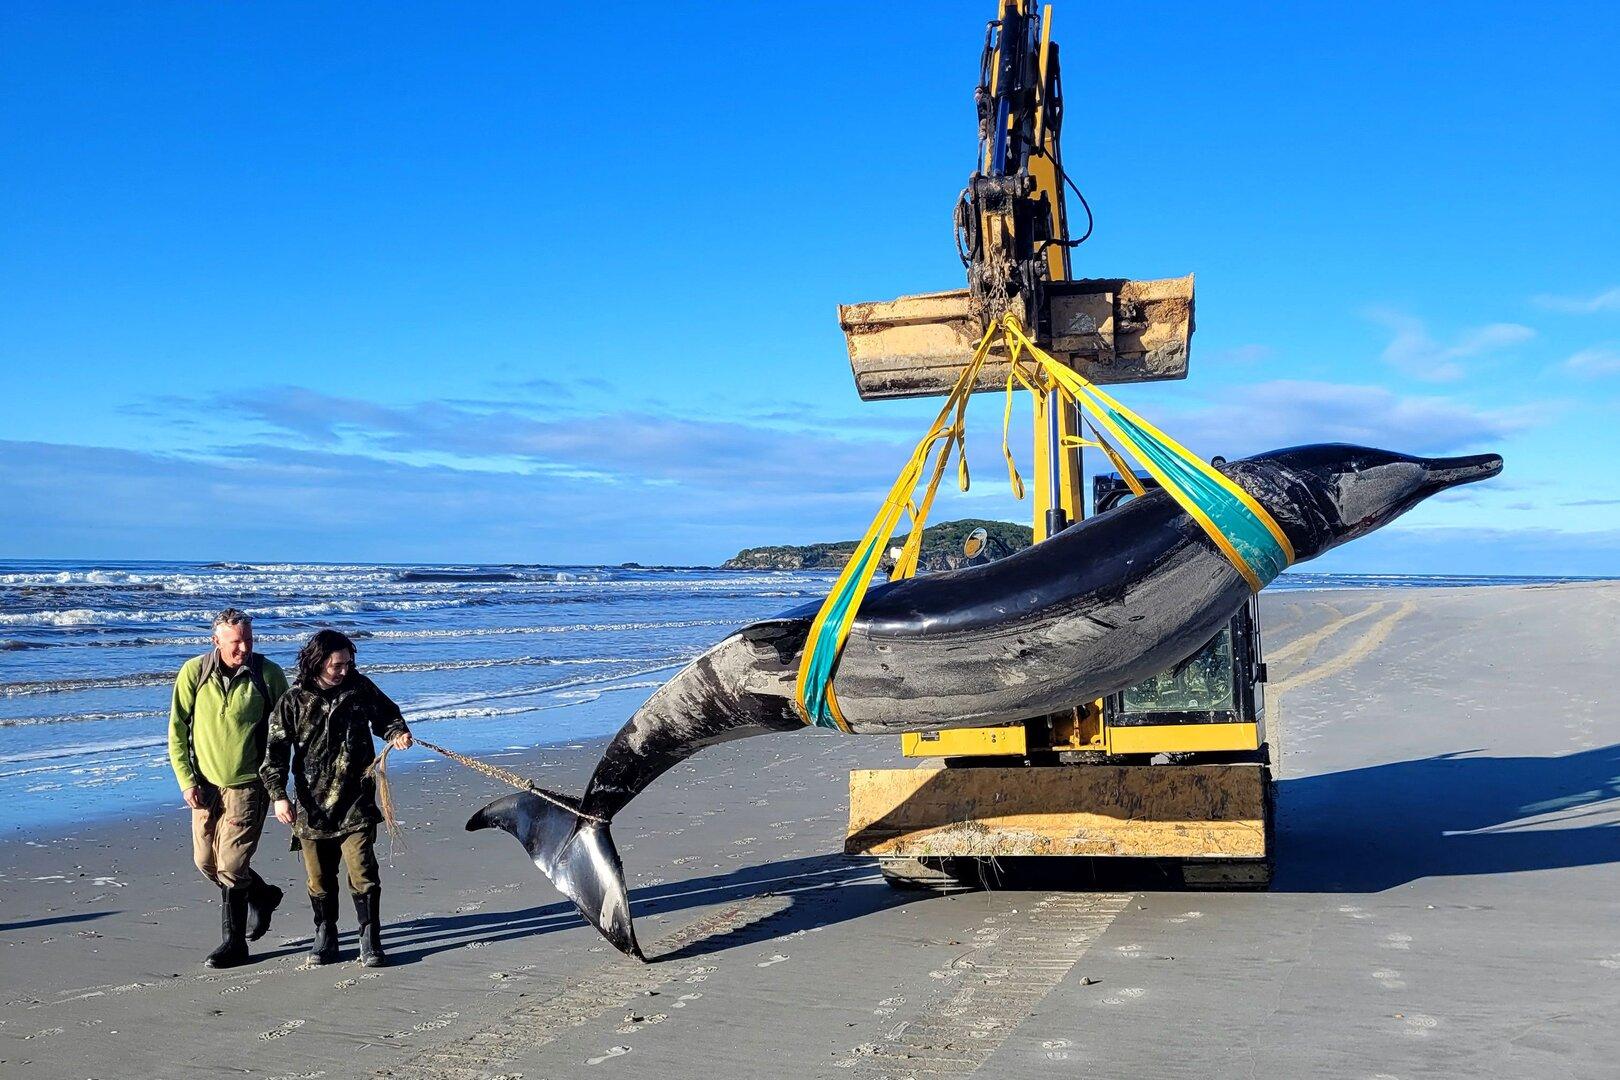 Extrem seltener Wal in Neuseeland an Strand gespült